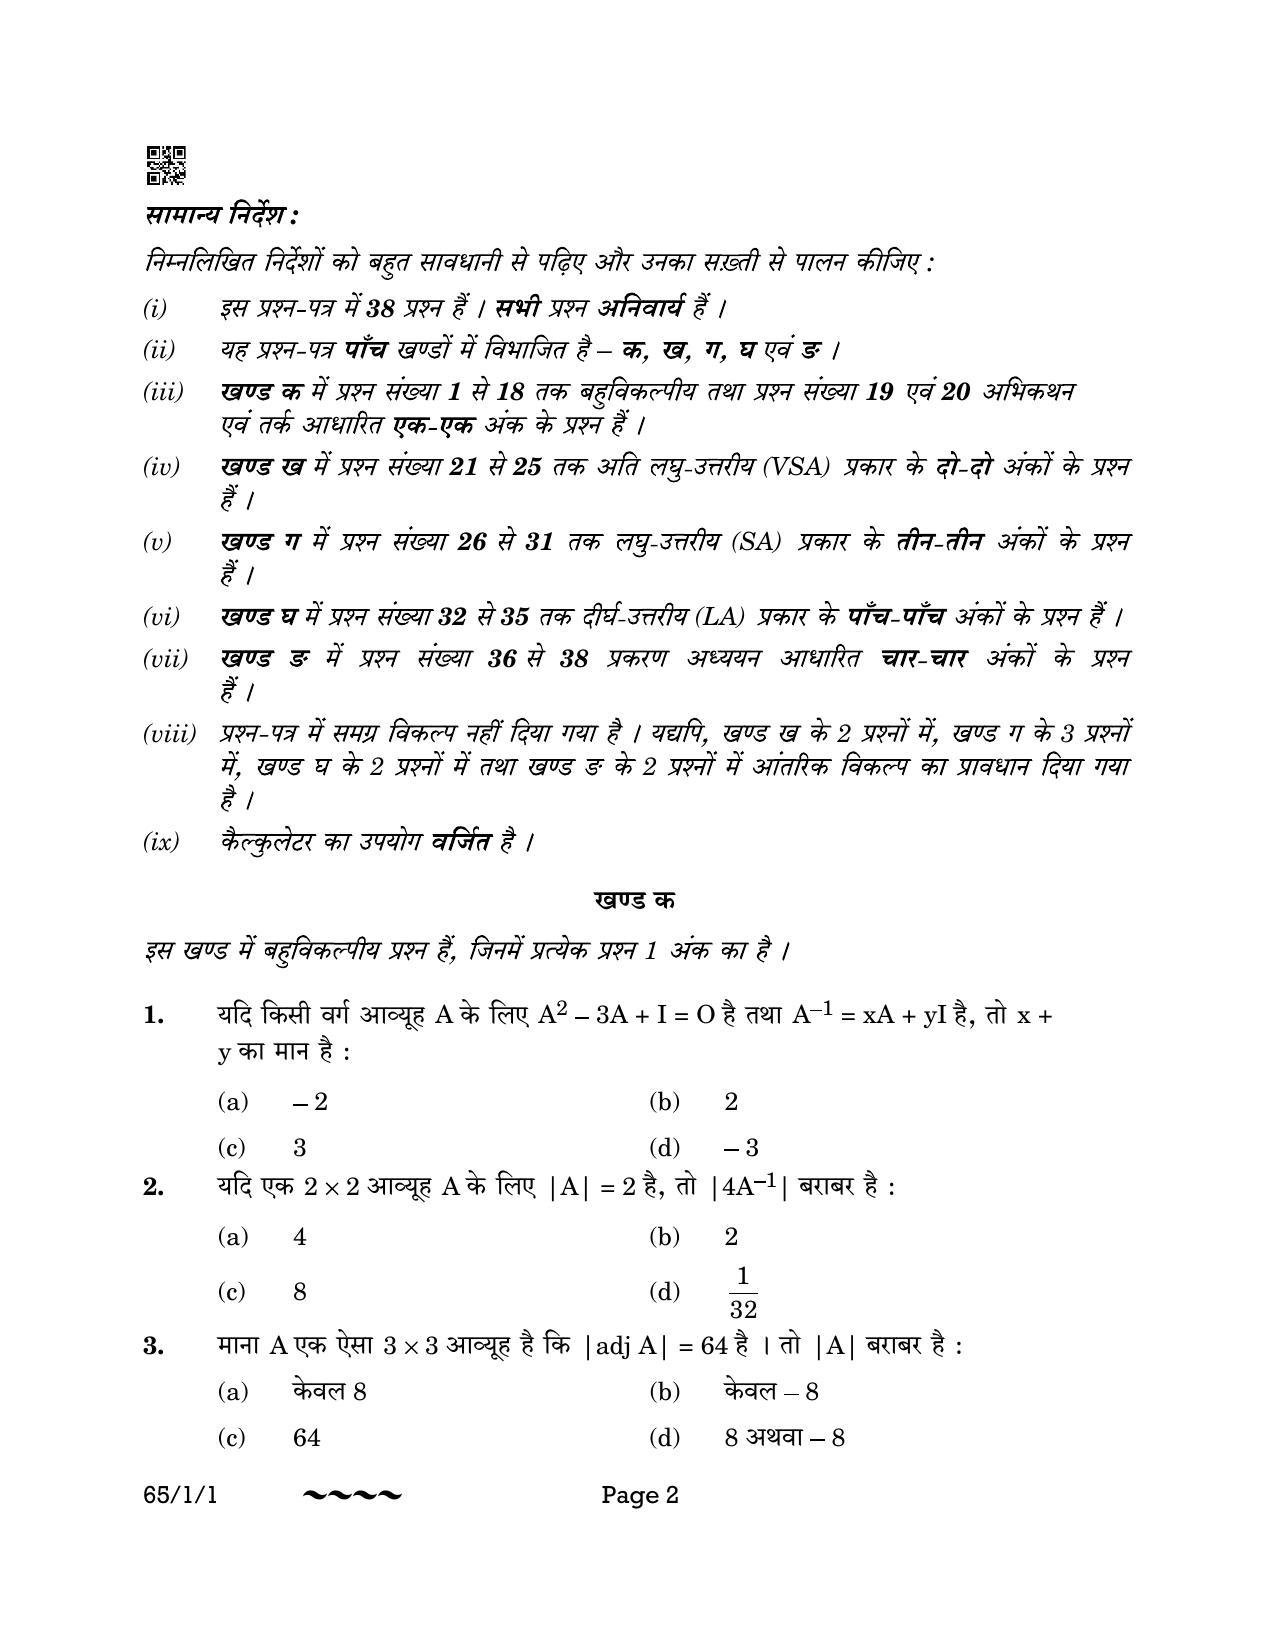 CBSE Class 12 65-1-1 MATHEMATICS 2023 Question Paper - Page 2